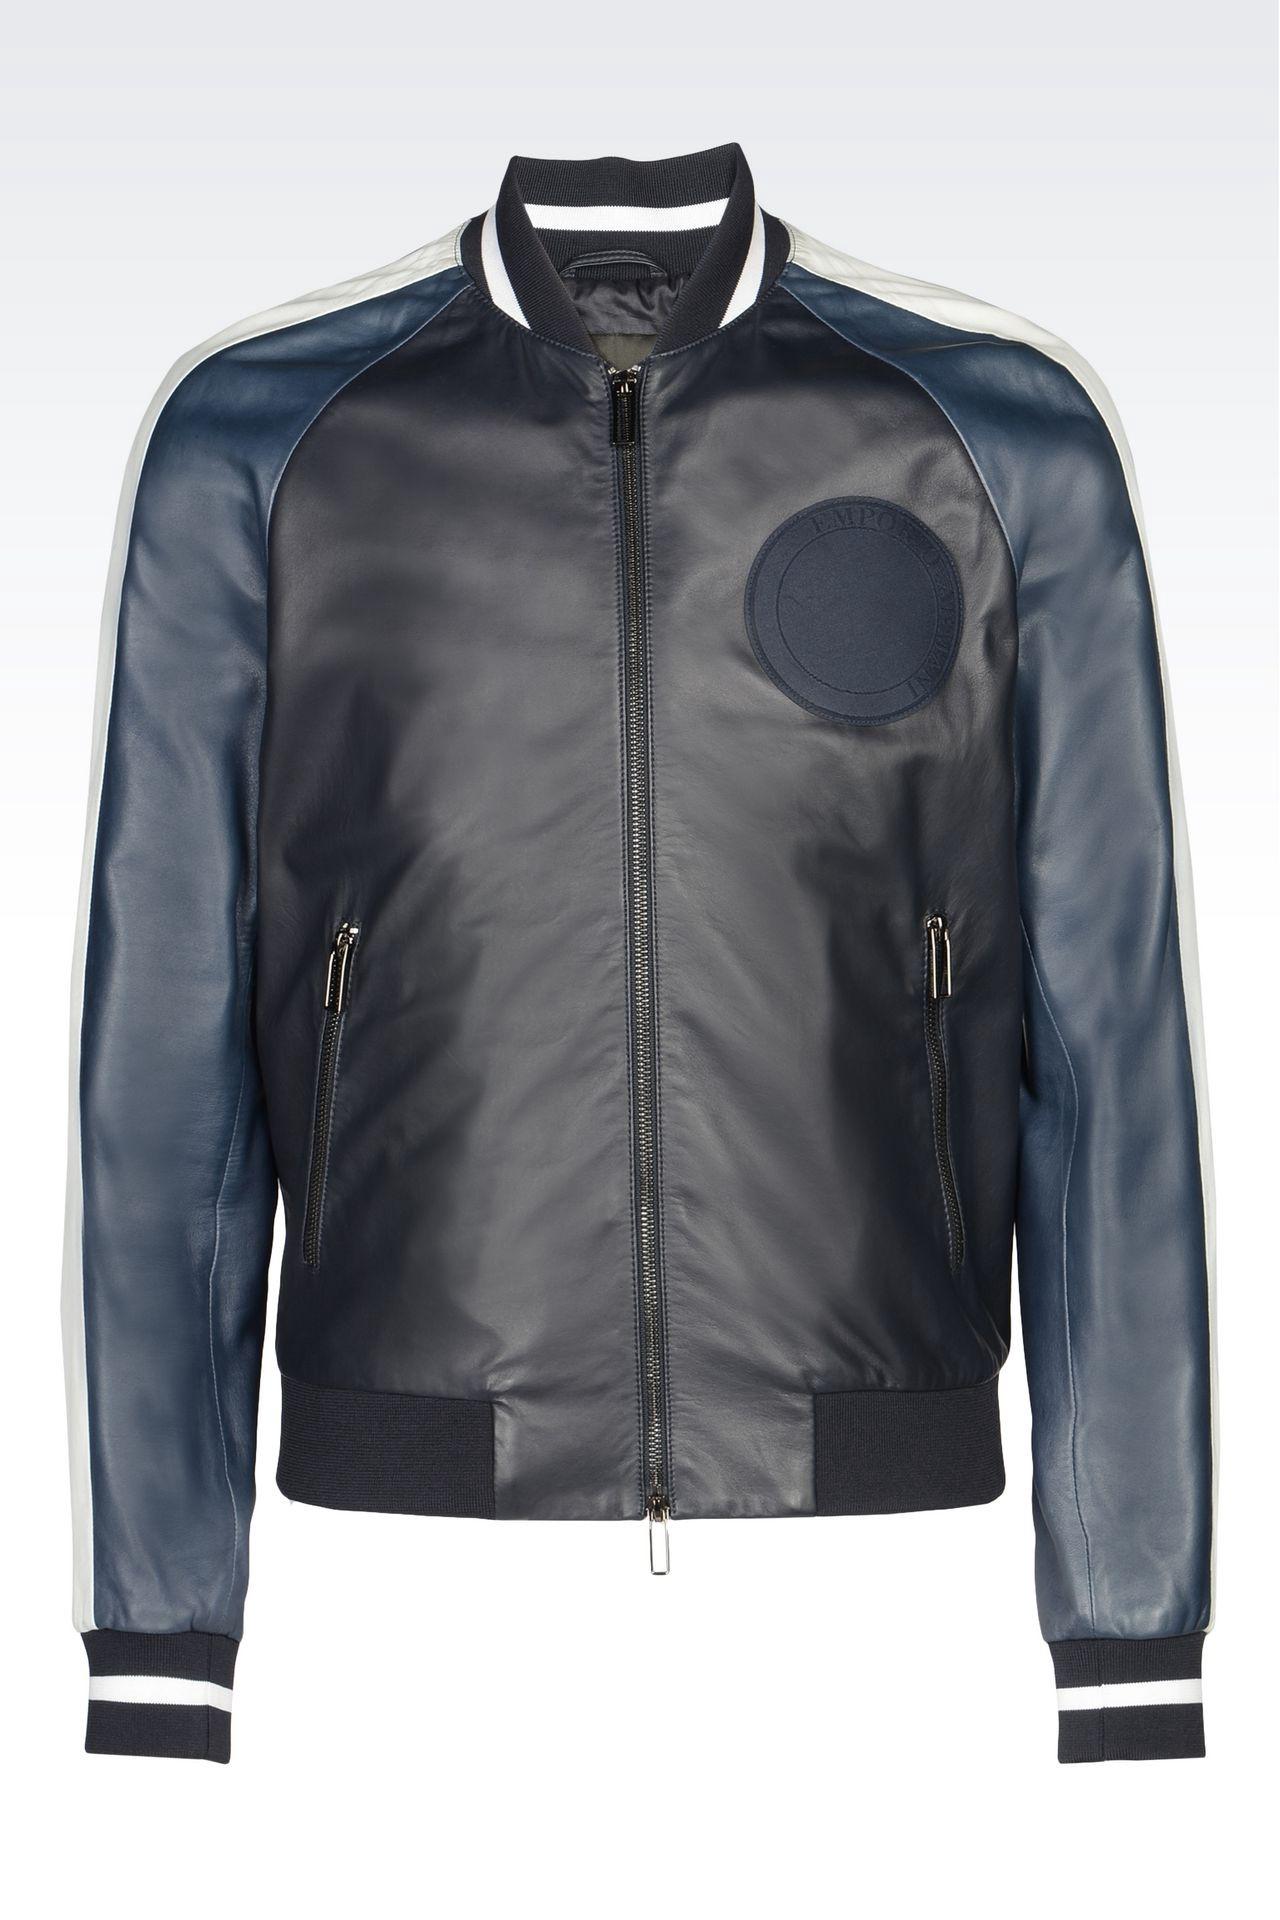 armani blue leather jacket